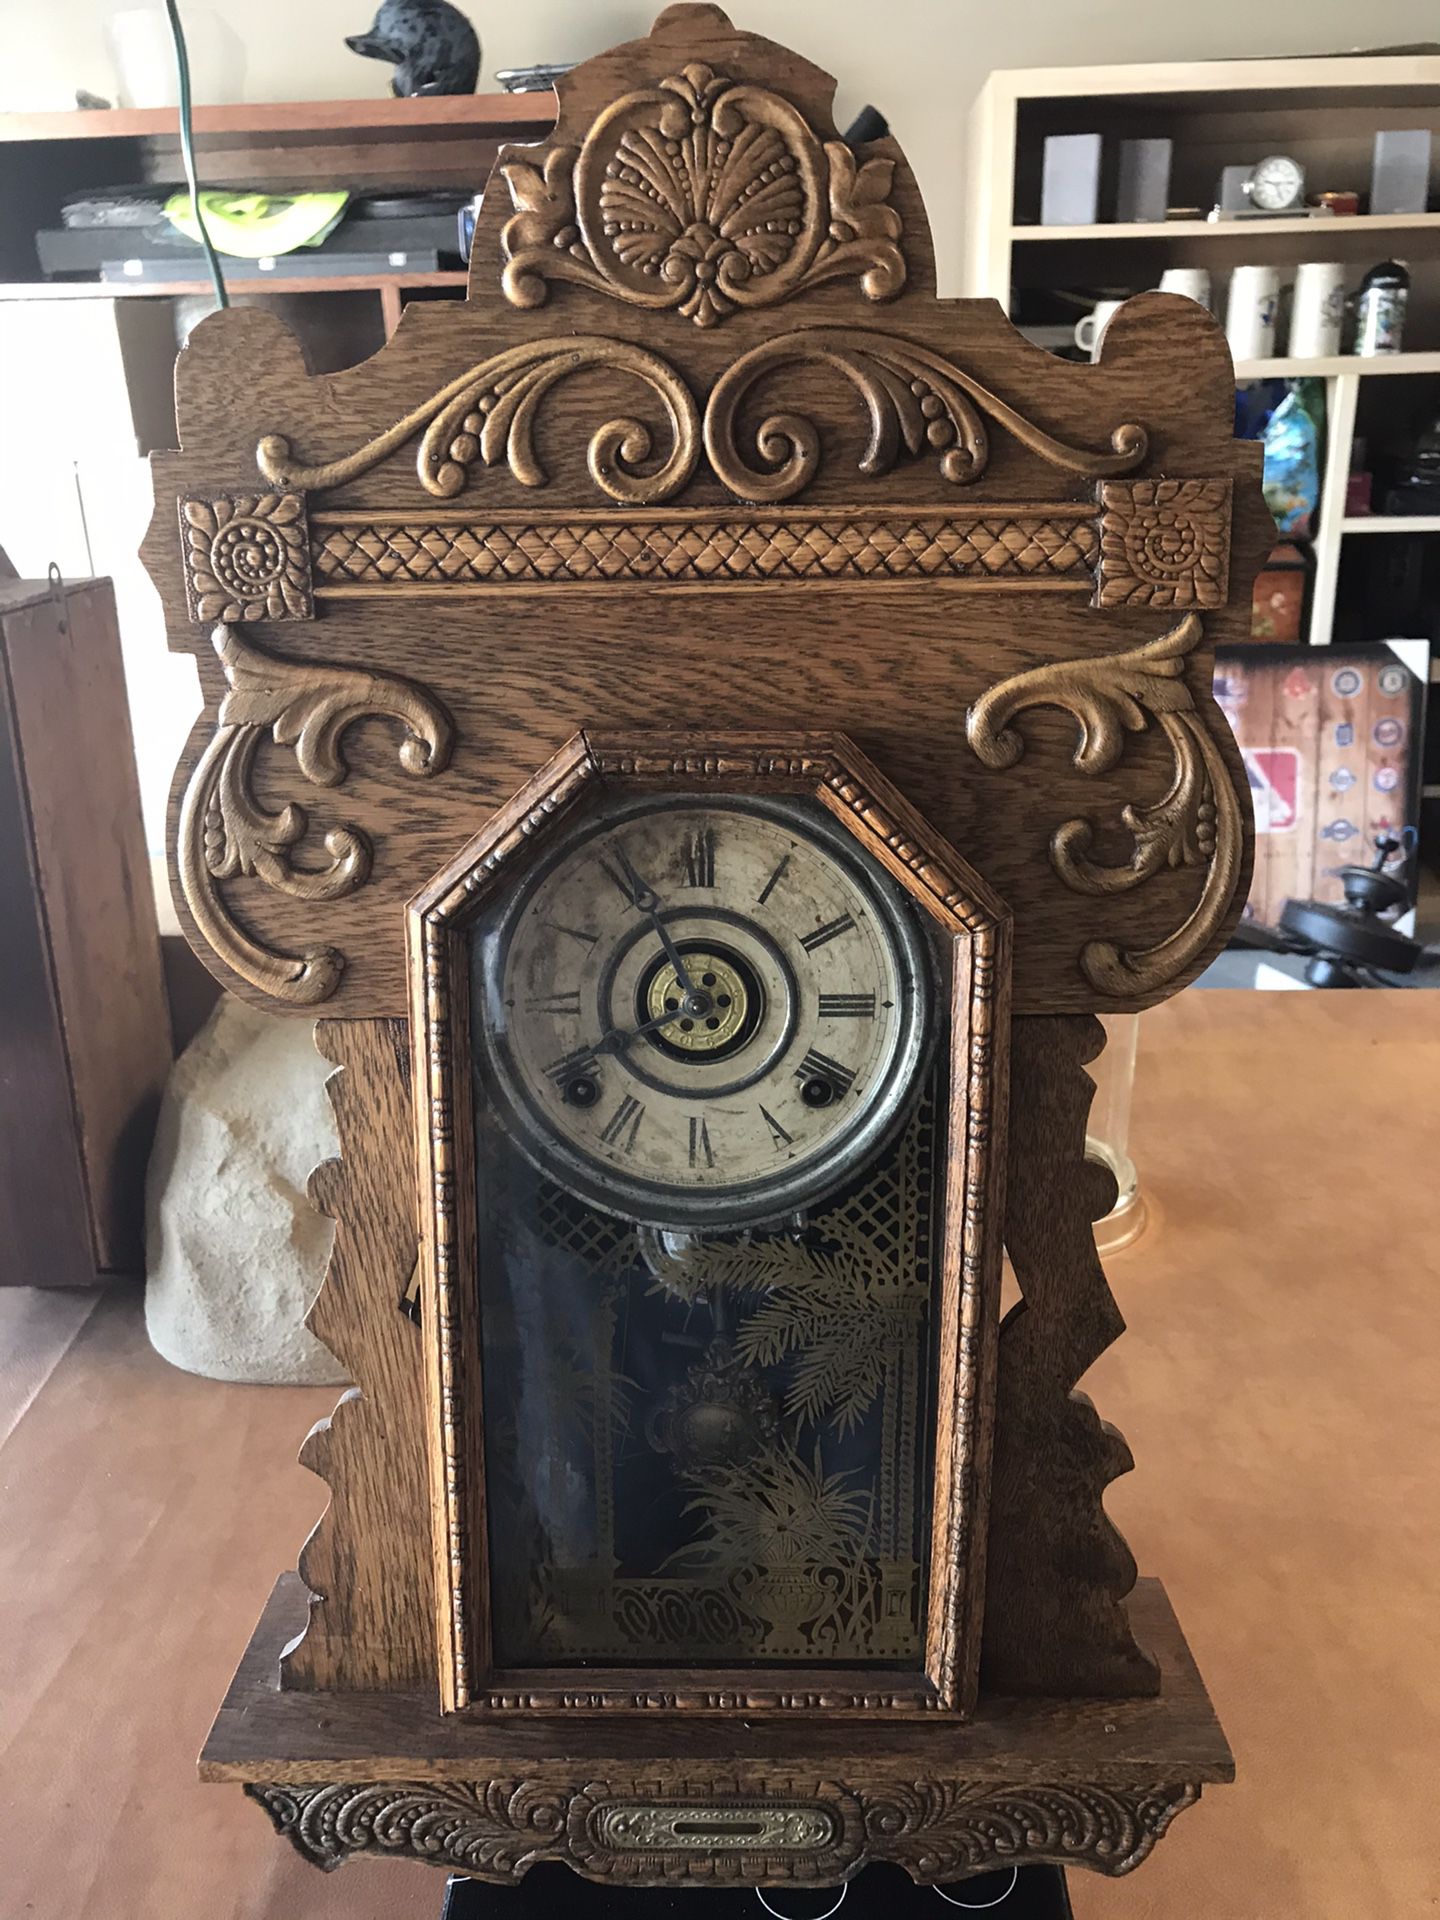 Waterbury antique mechanical clock